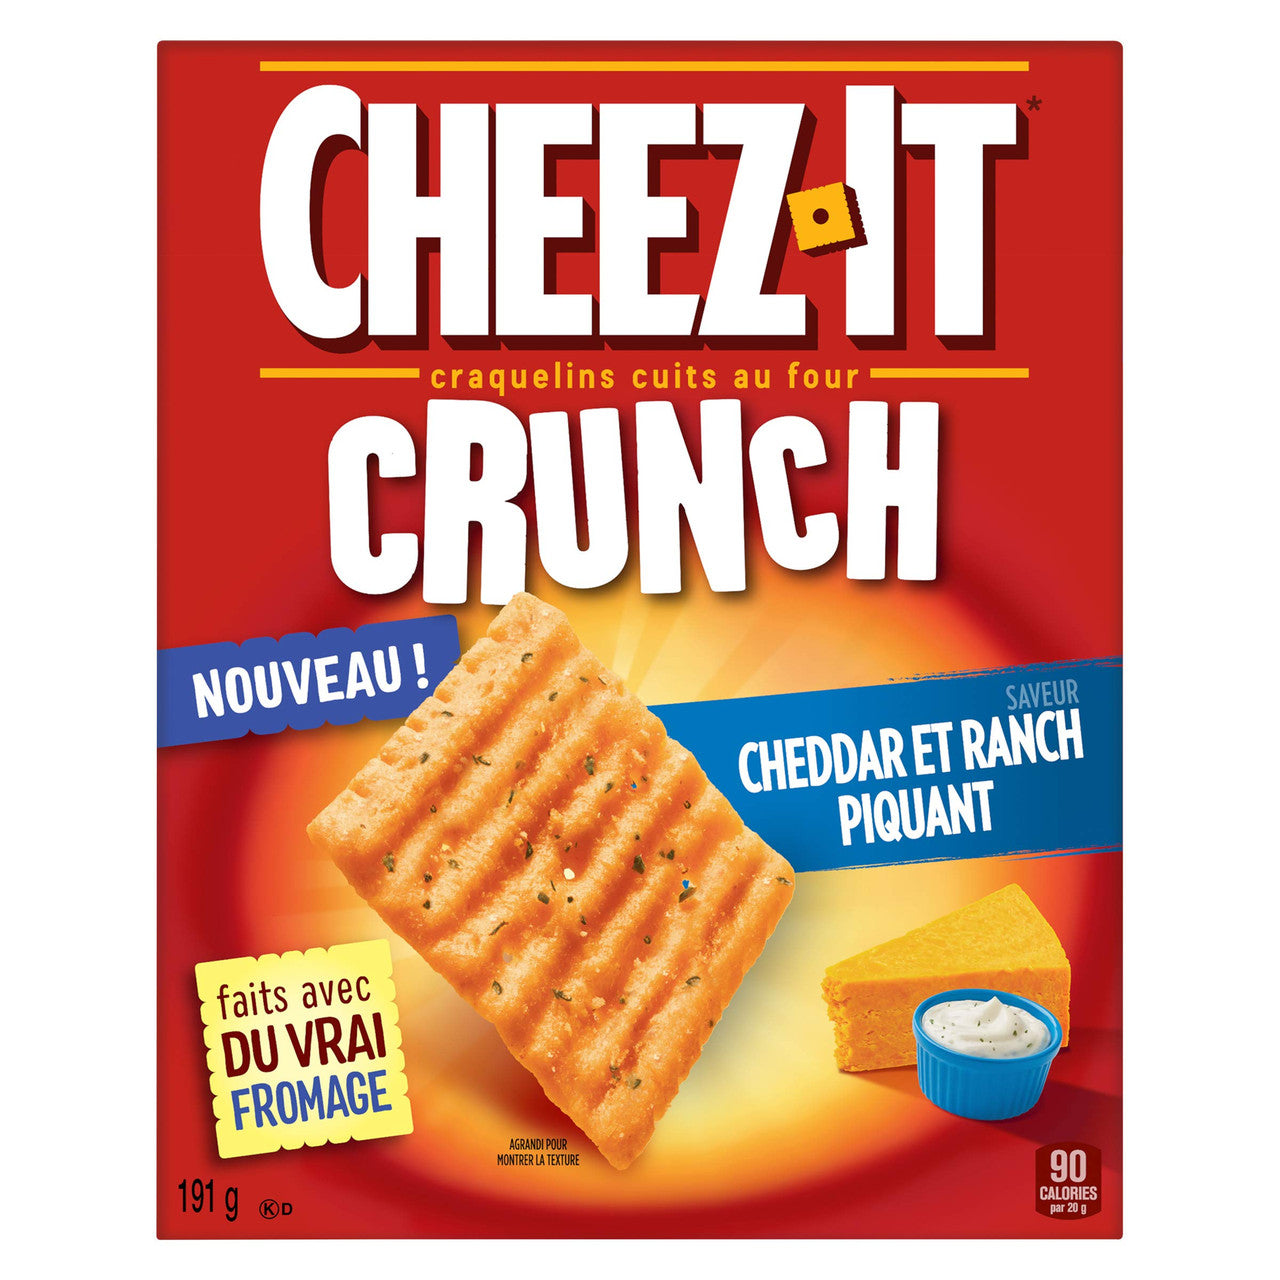 Cheez-It Crunch, Zesty Cheddar Ranch 191g/6.7 oz {Imported from Canada}